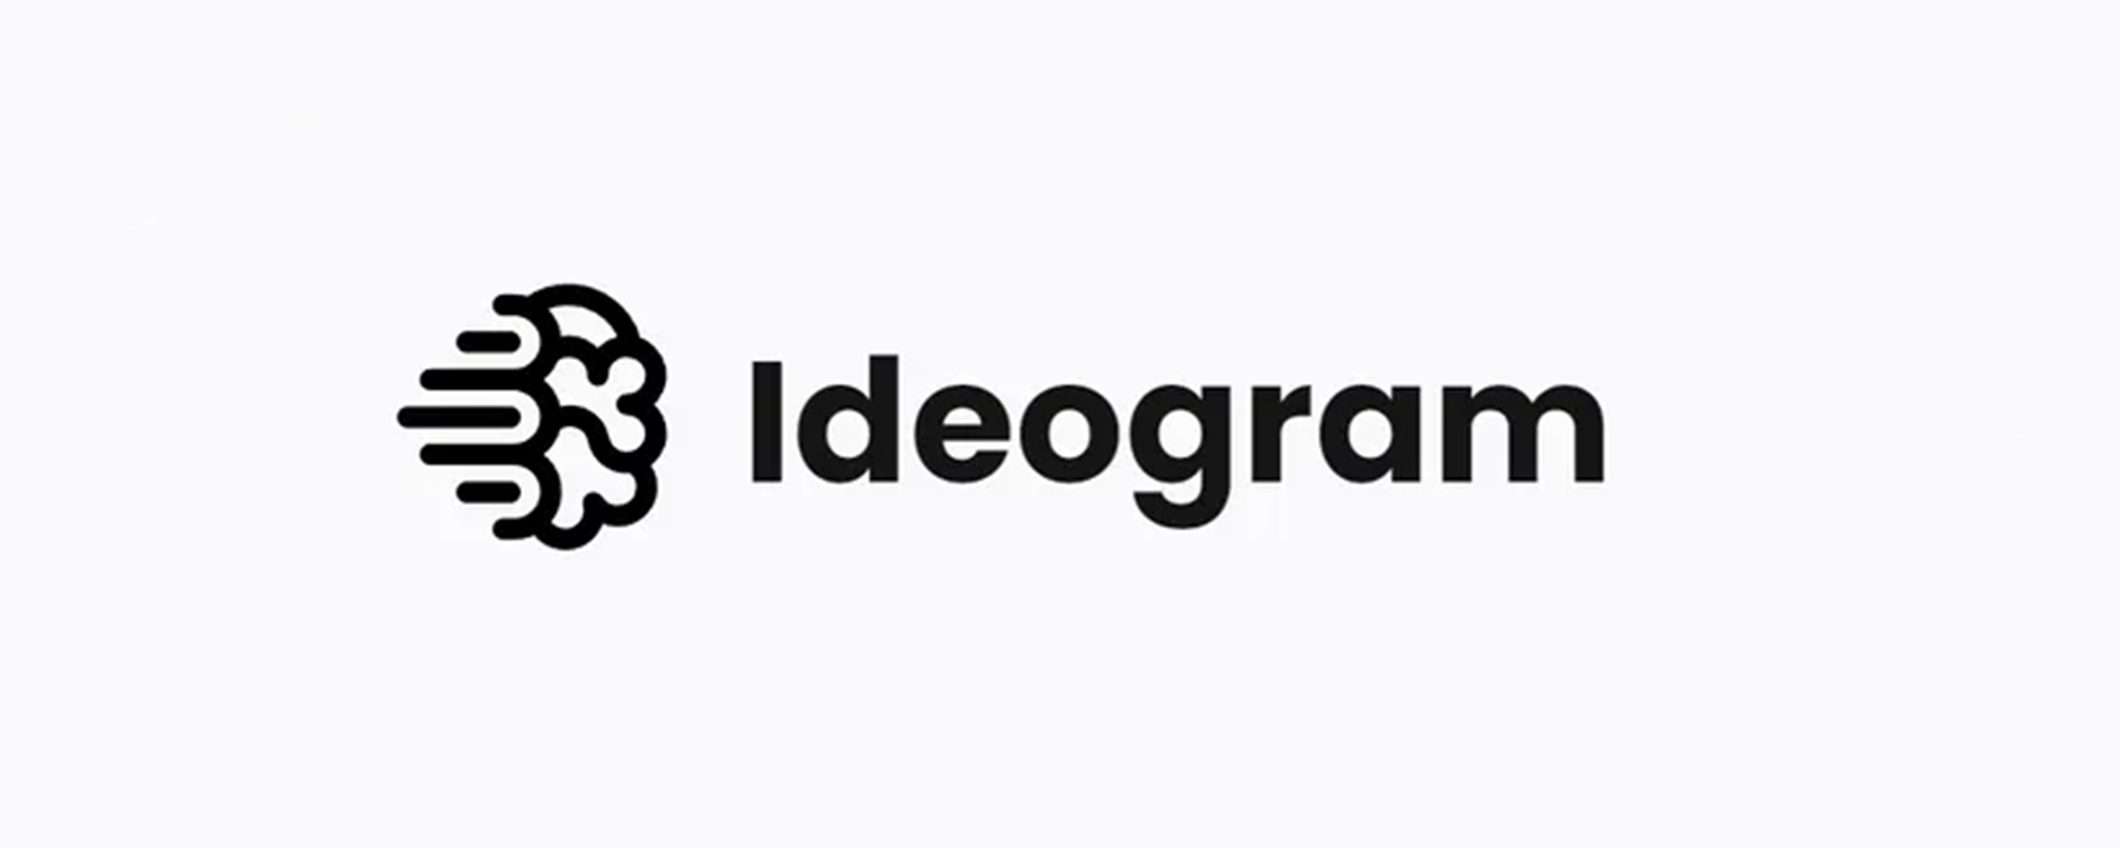 Novità per l'AI di Ideogram: riferimenti testuali e richieste negative